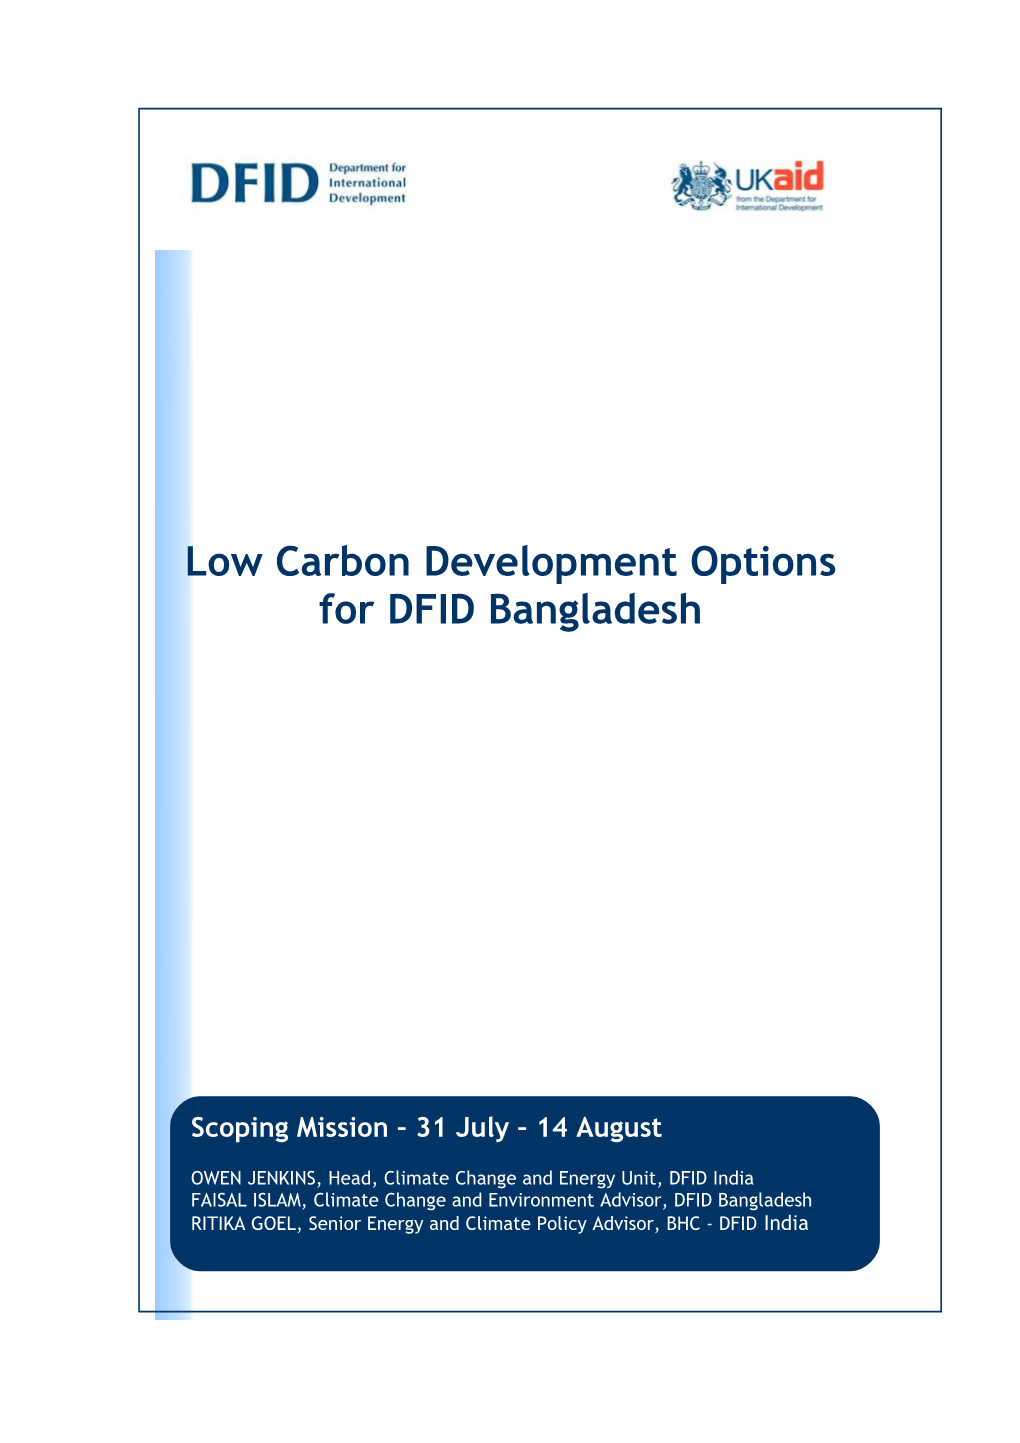 Low Carbon Development Options for DFID Bangladesh